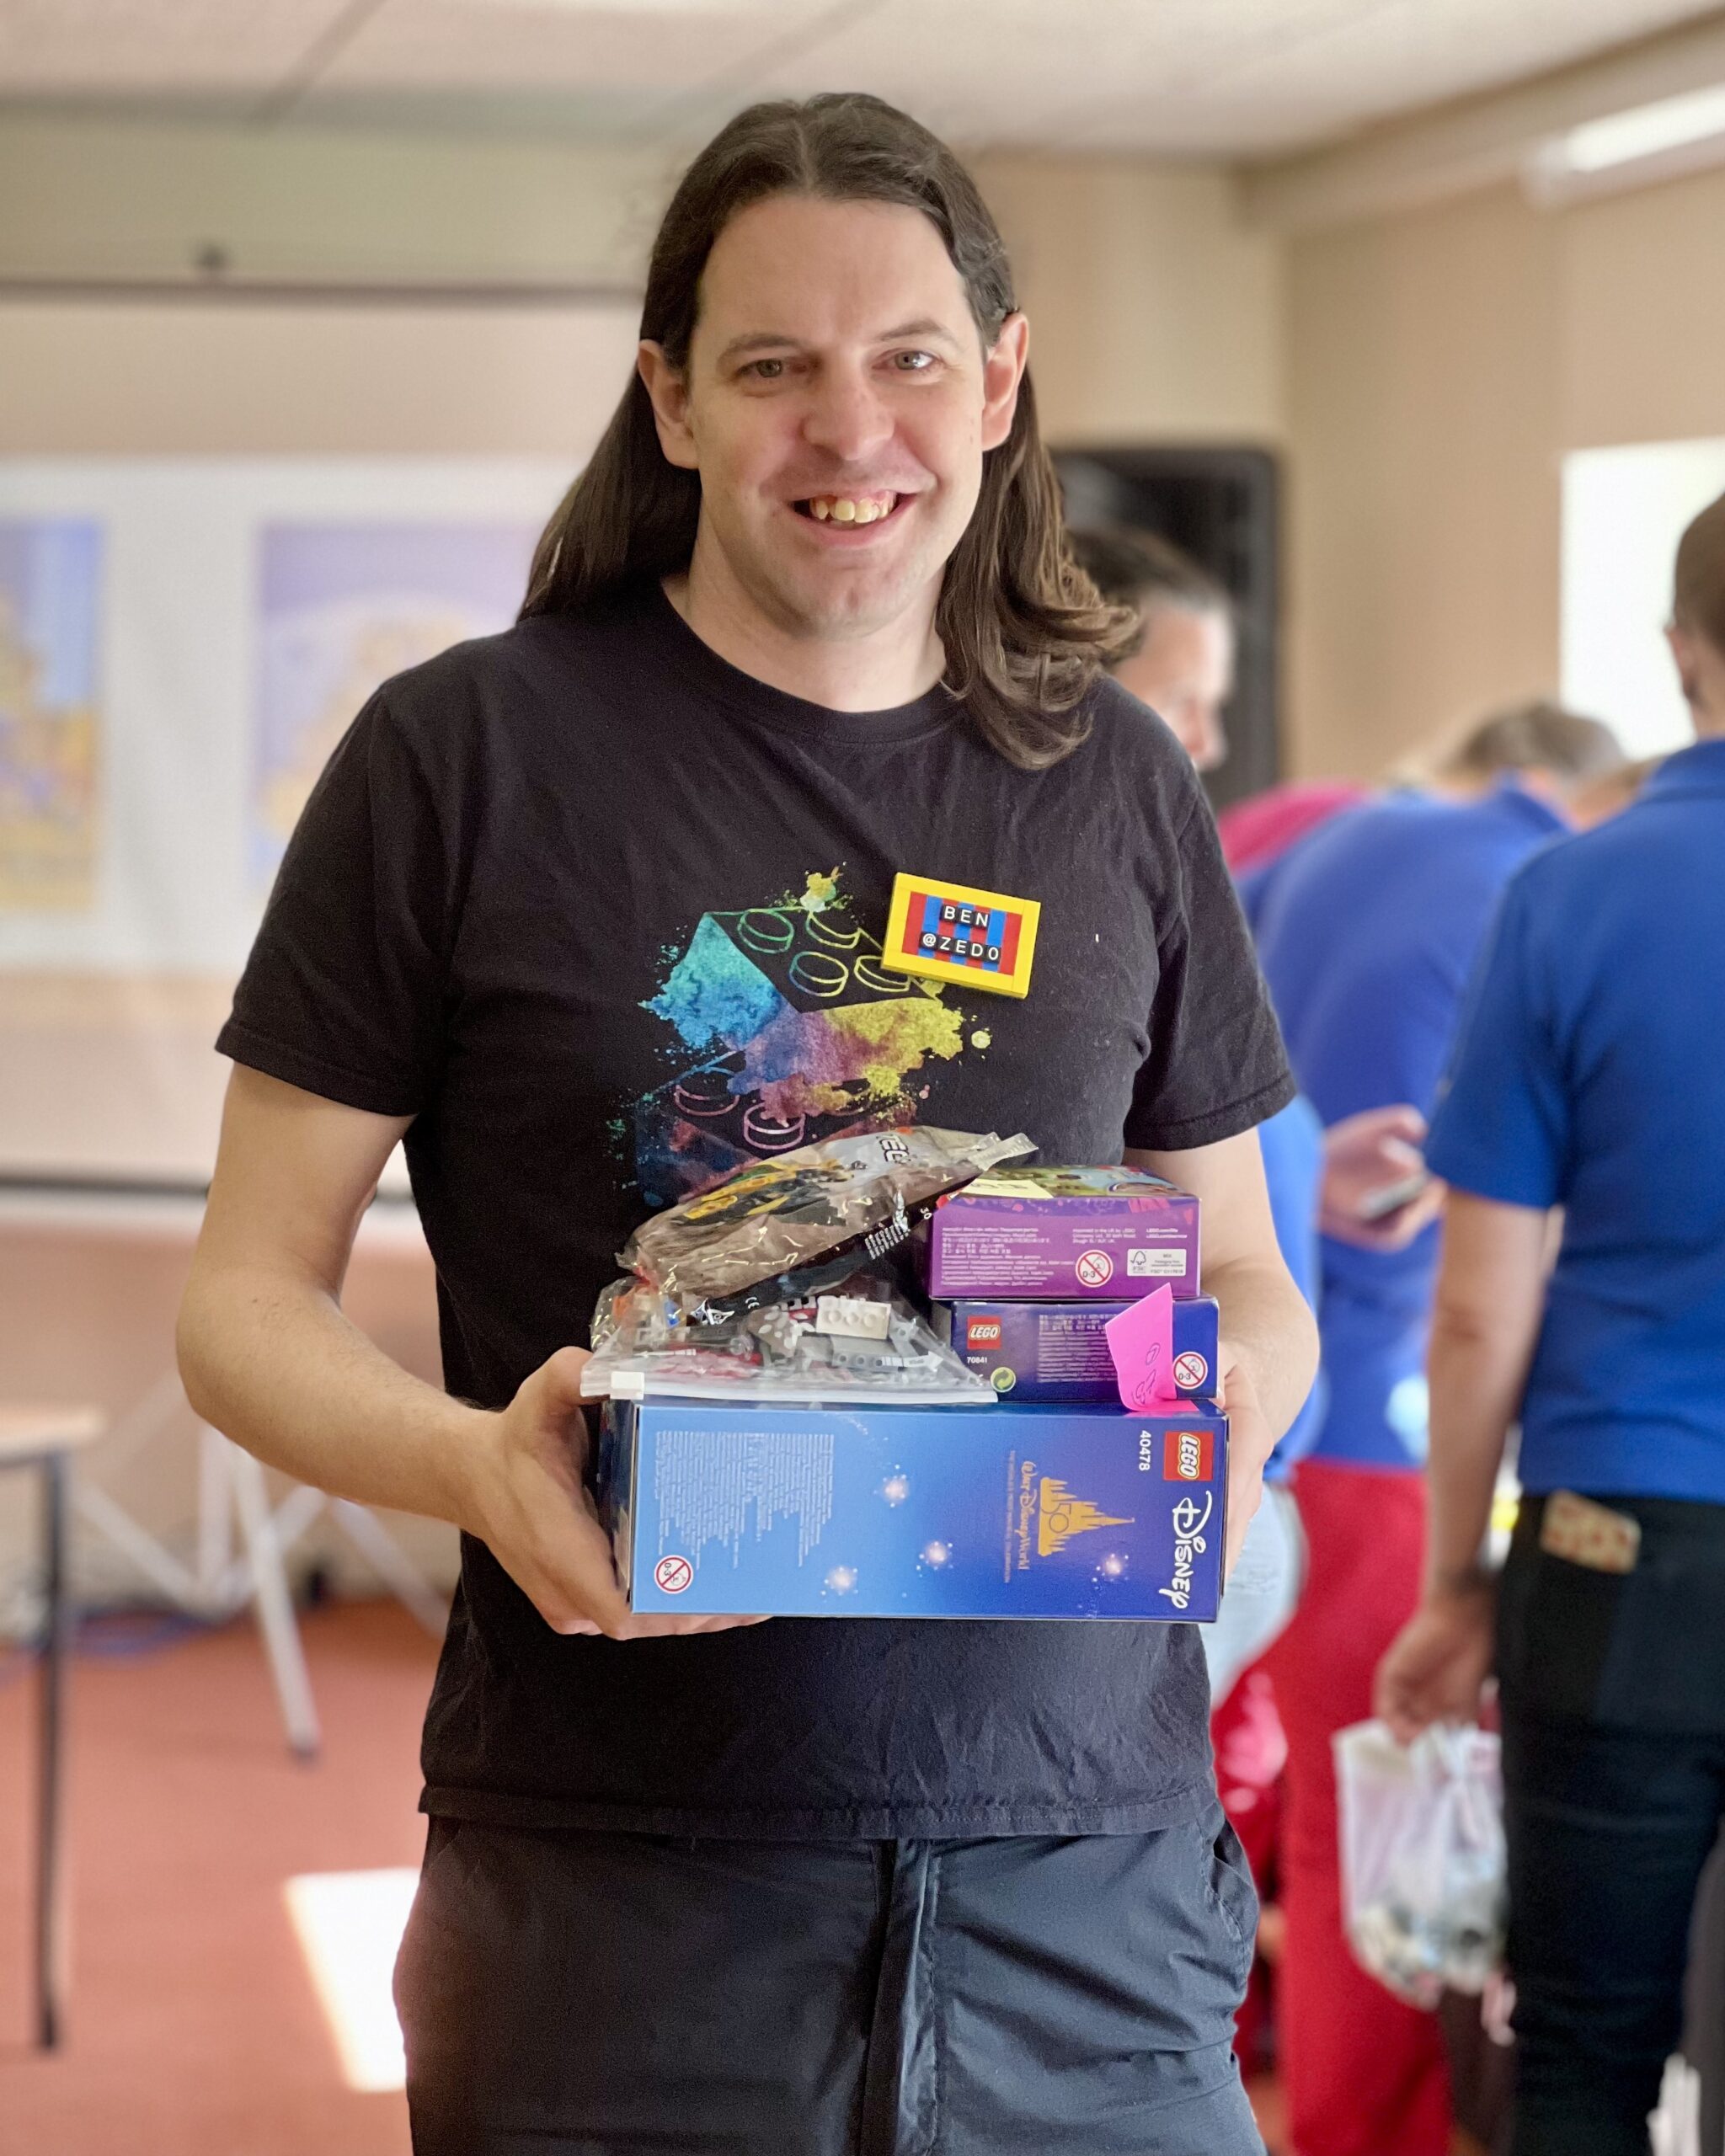 Ben holding his pile of prizes, including mini Disney castle.